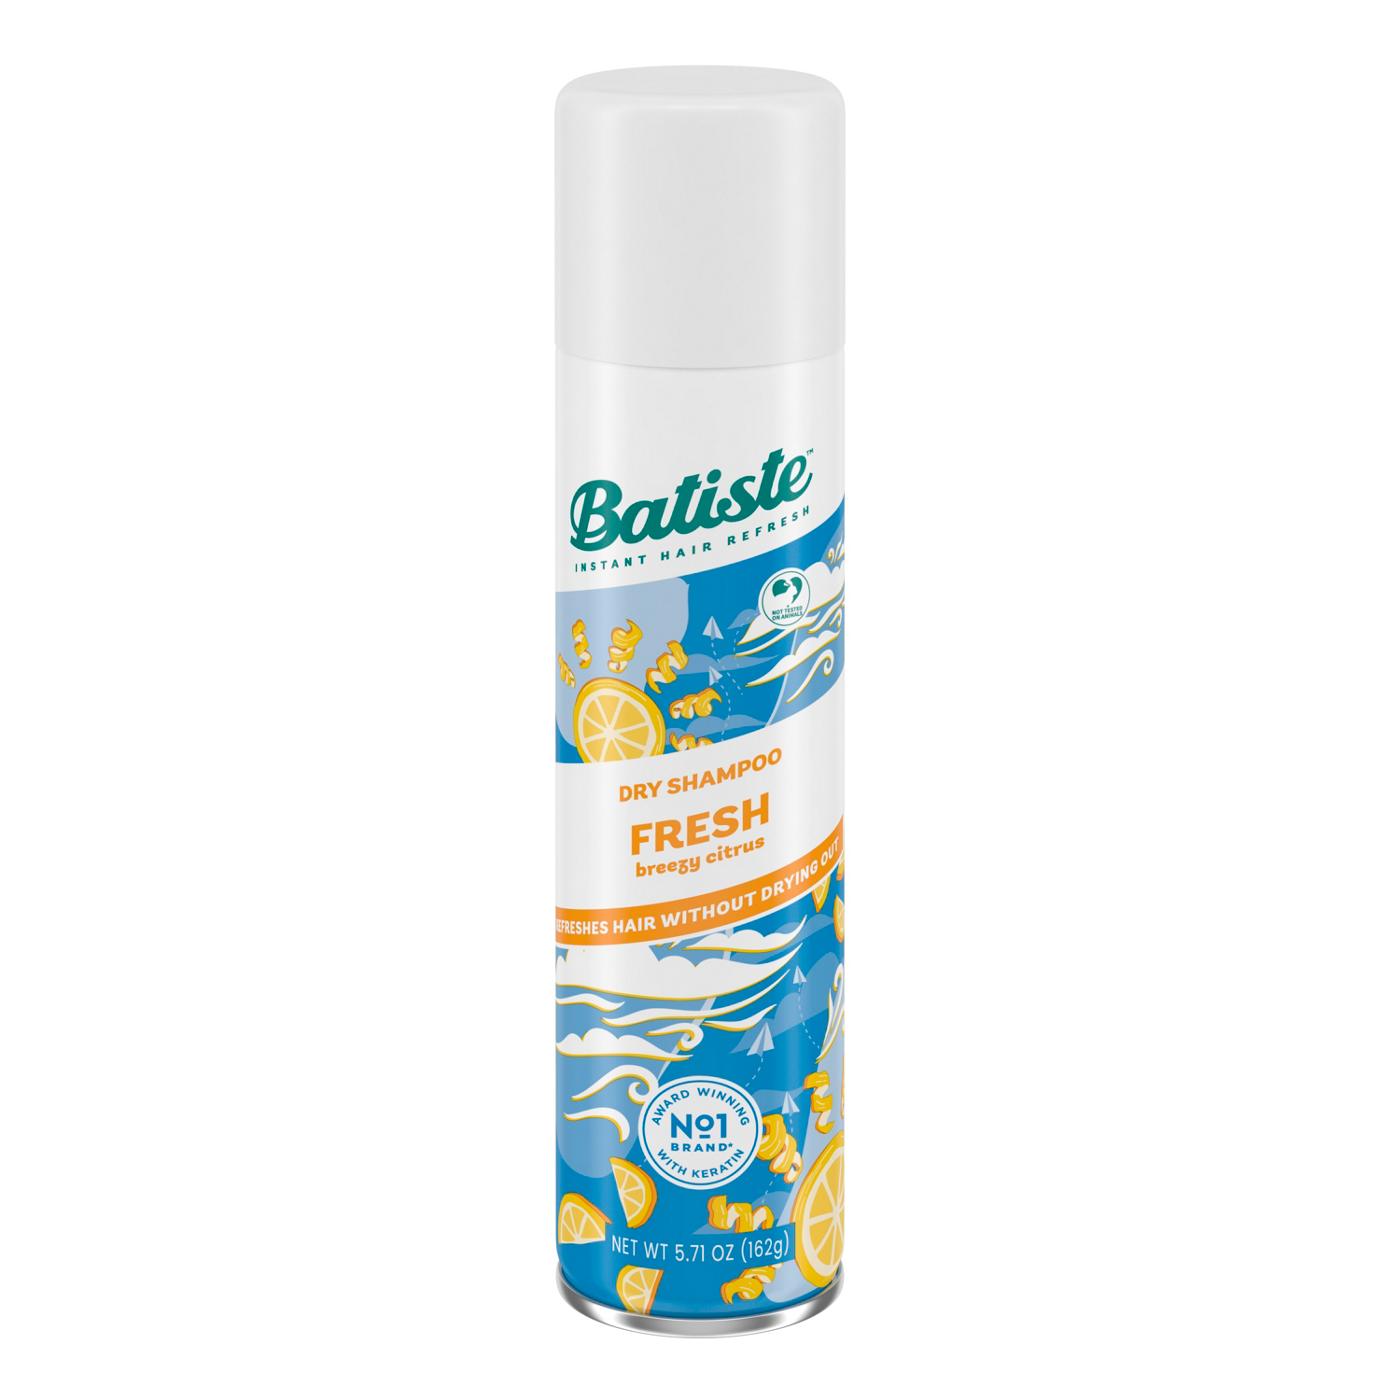 Batiste Dry Shampoo - Fresh Breezy Citrus; image 1 of 4